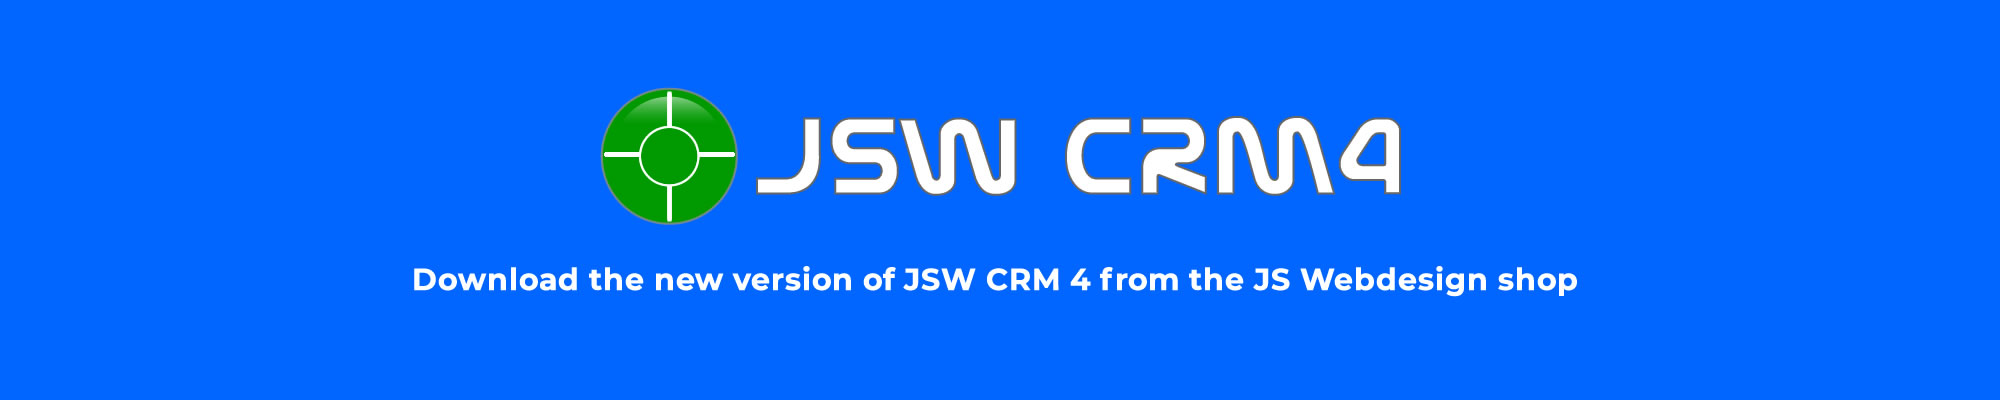 jswcrm4 banner